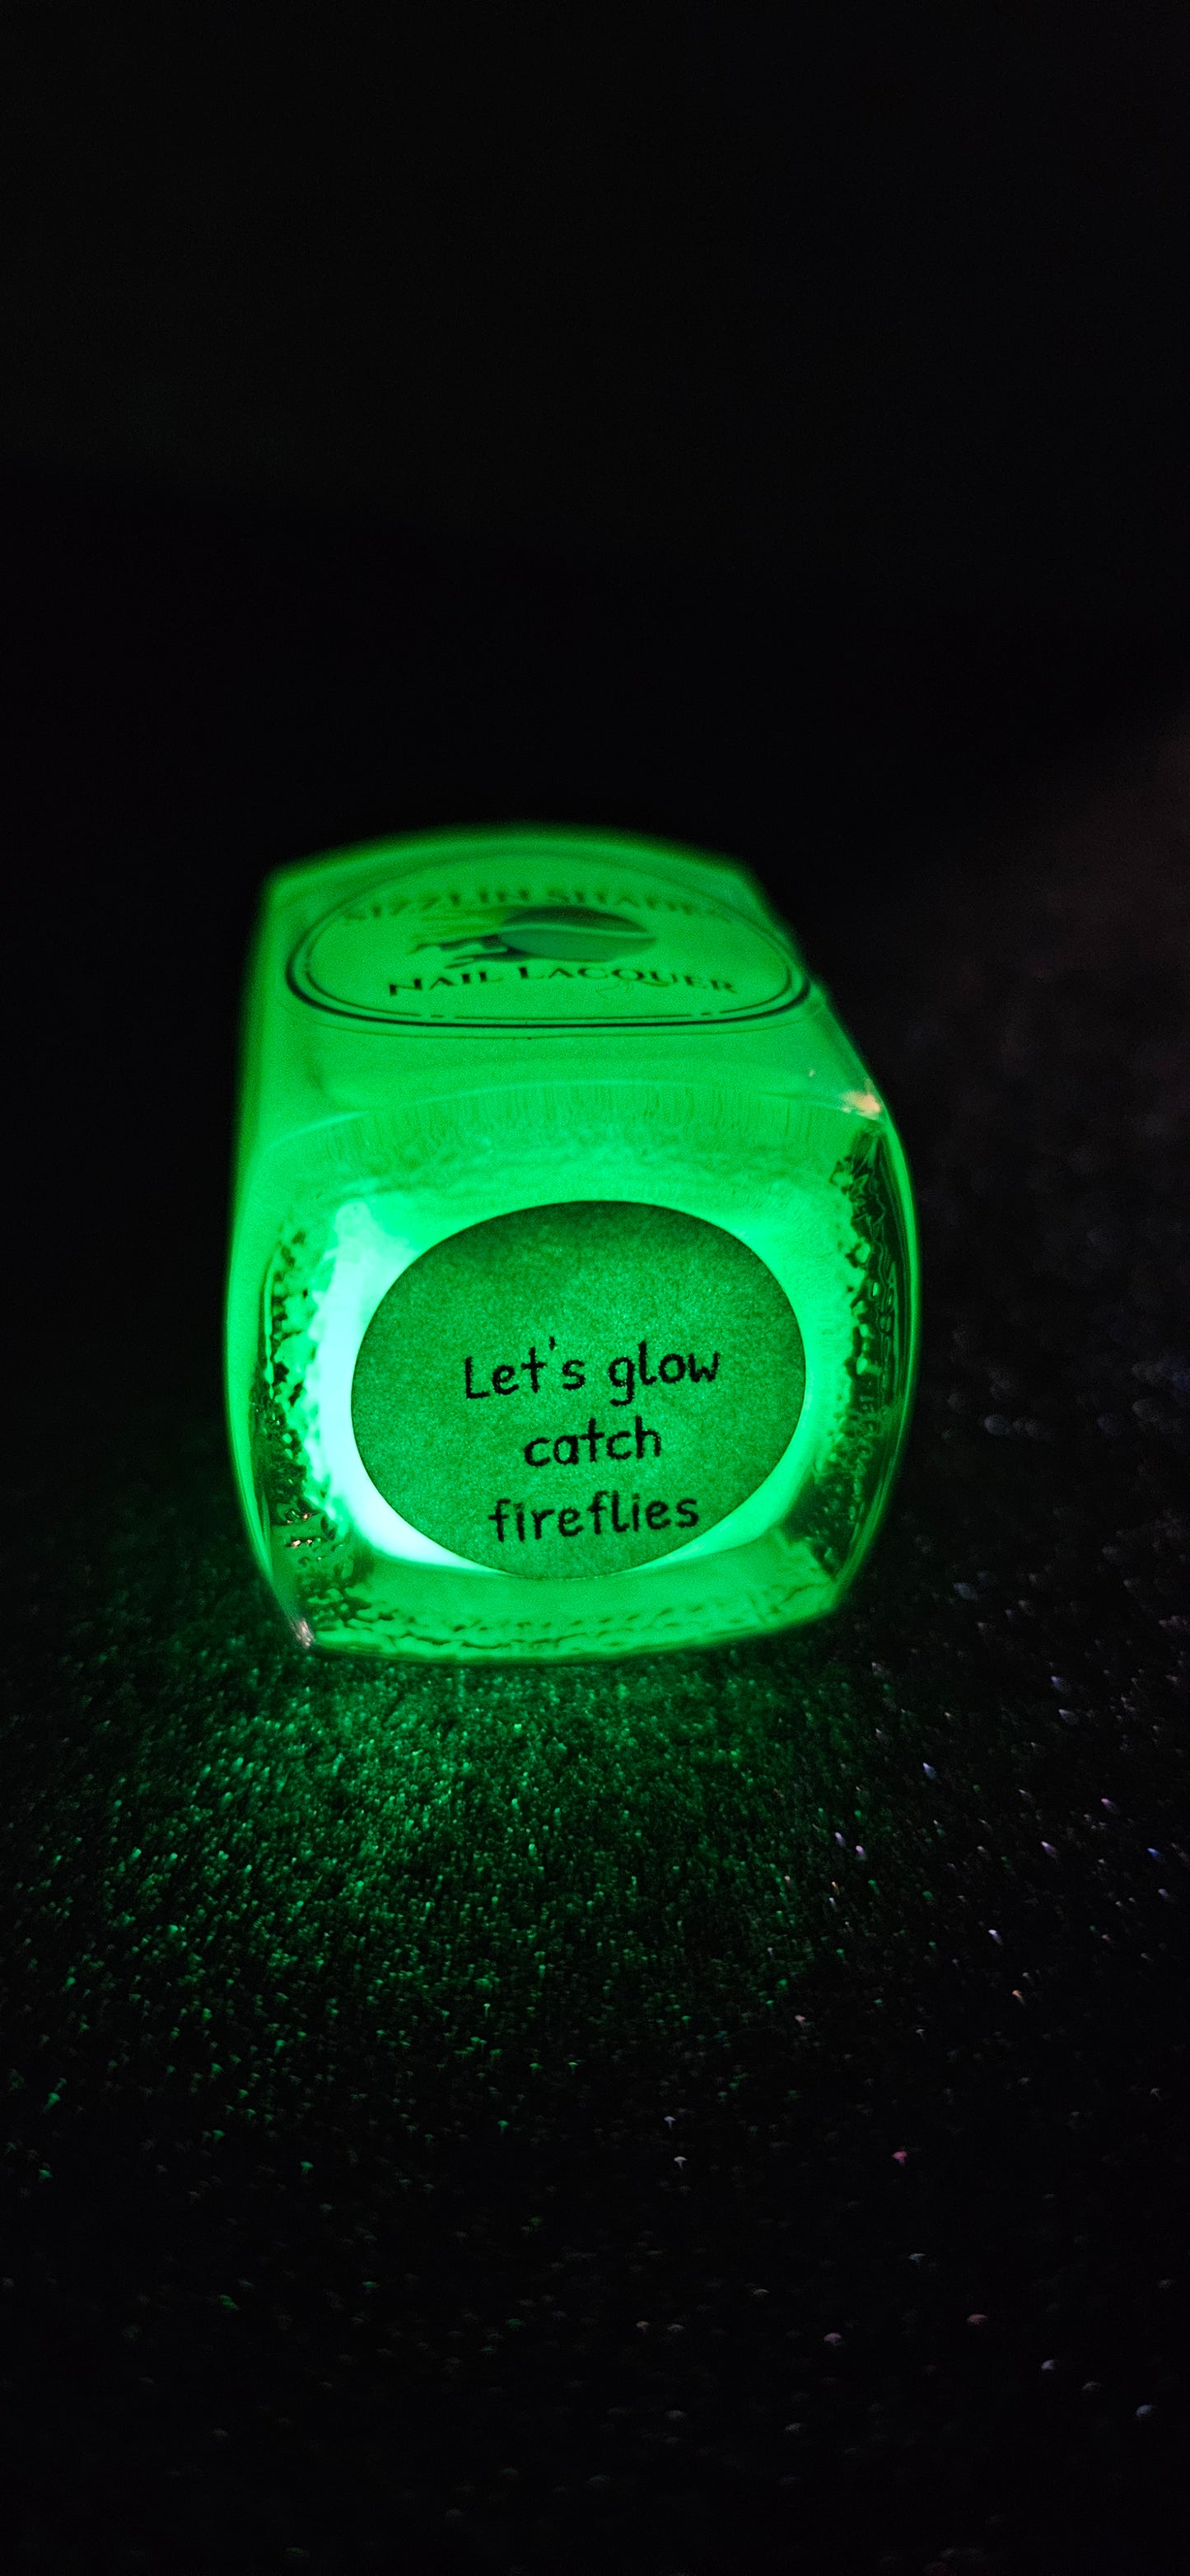 Let's glow catch fireflies